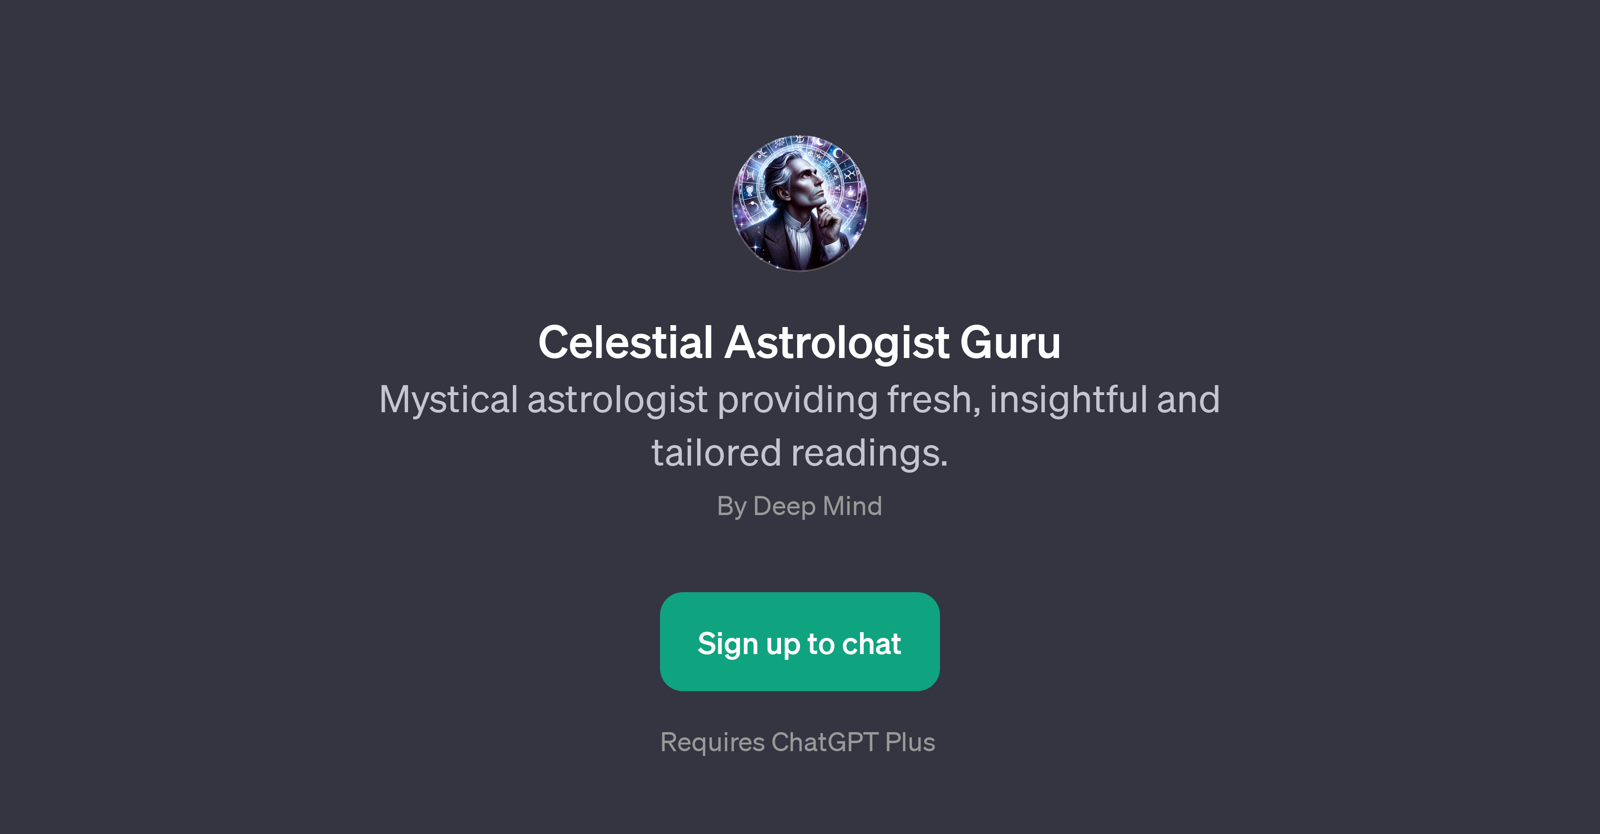 Celestial Astrologist Guru website